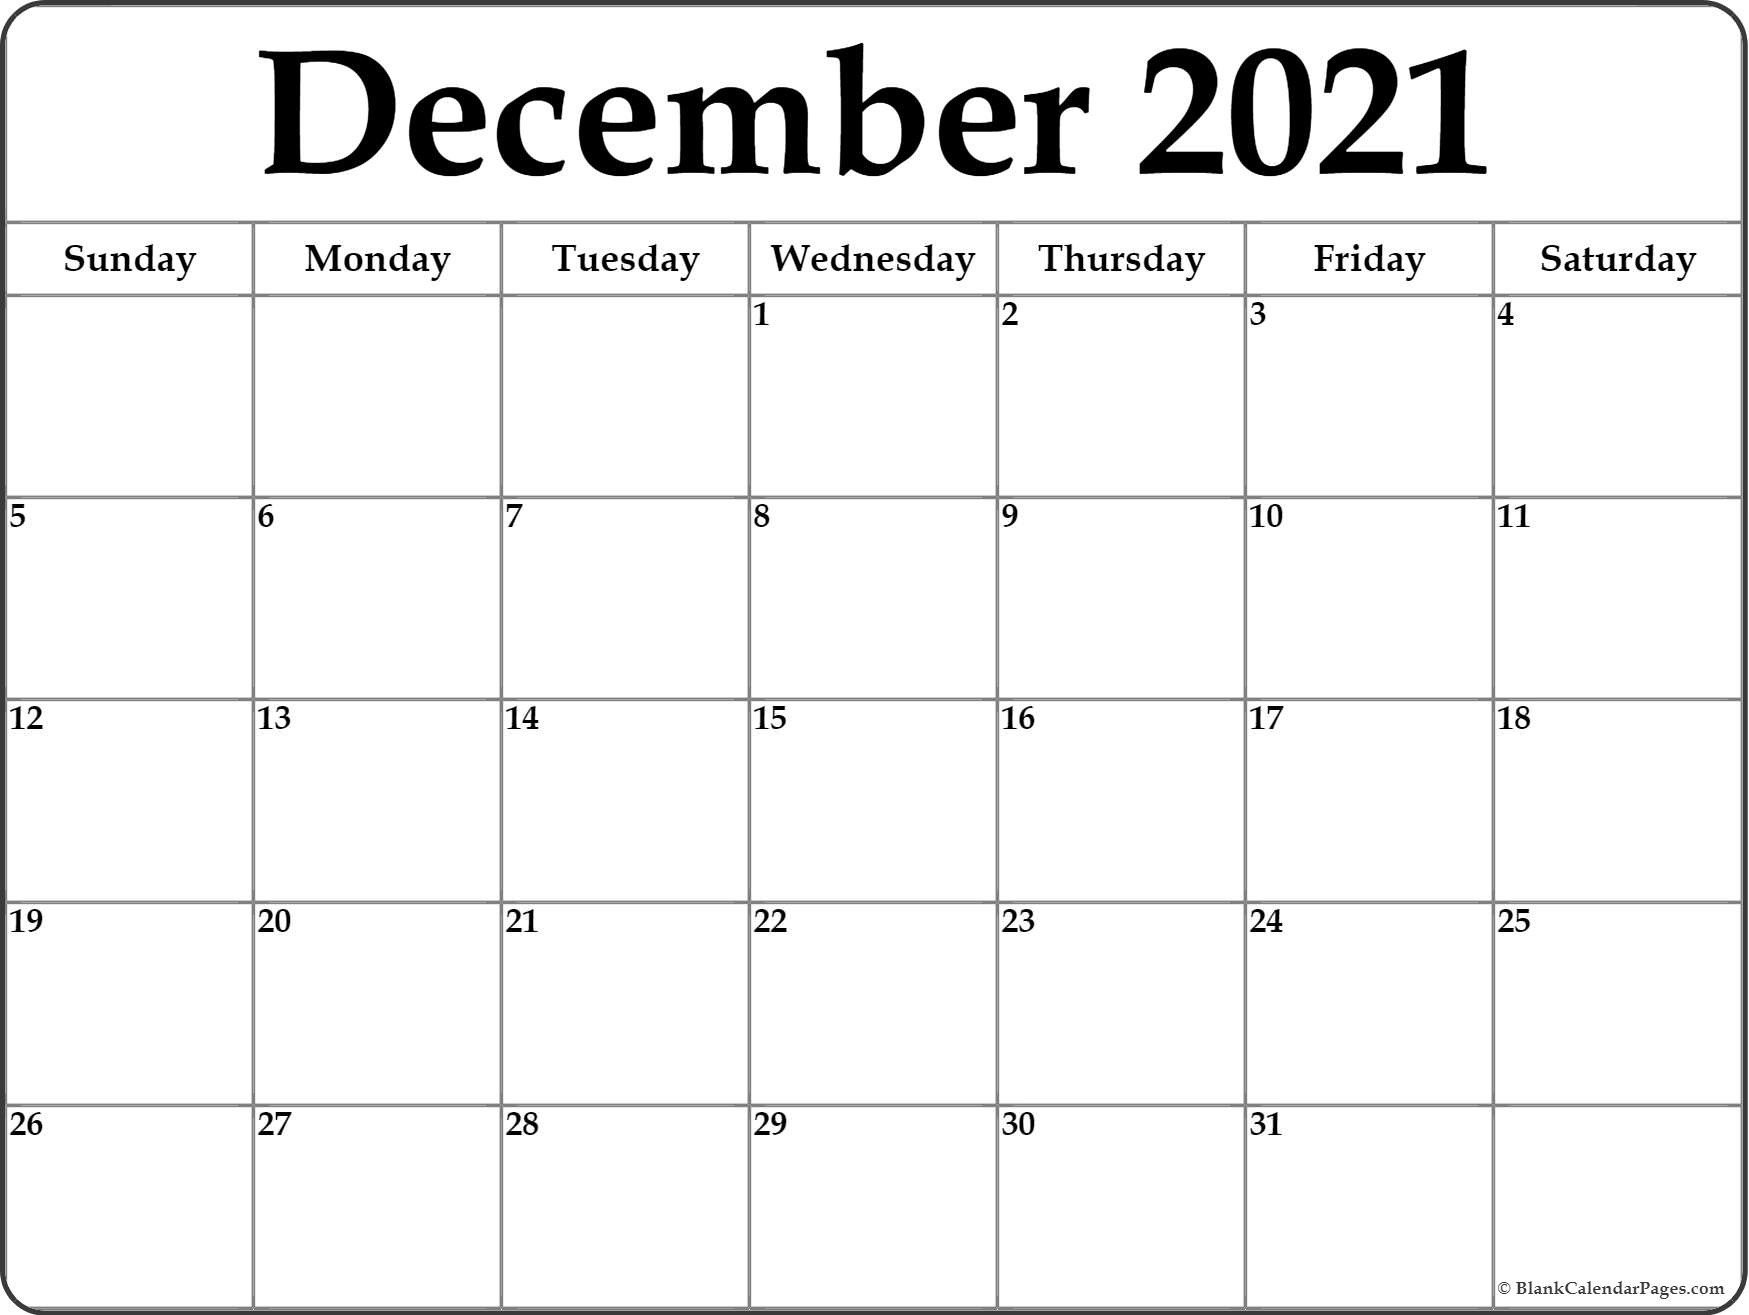 December 2021 Calendar | Free Printable Monthly Calendars  Free Printable Bill Calendar 2021